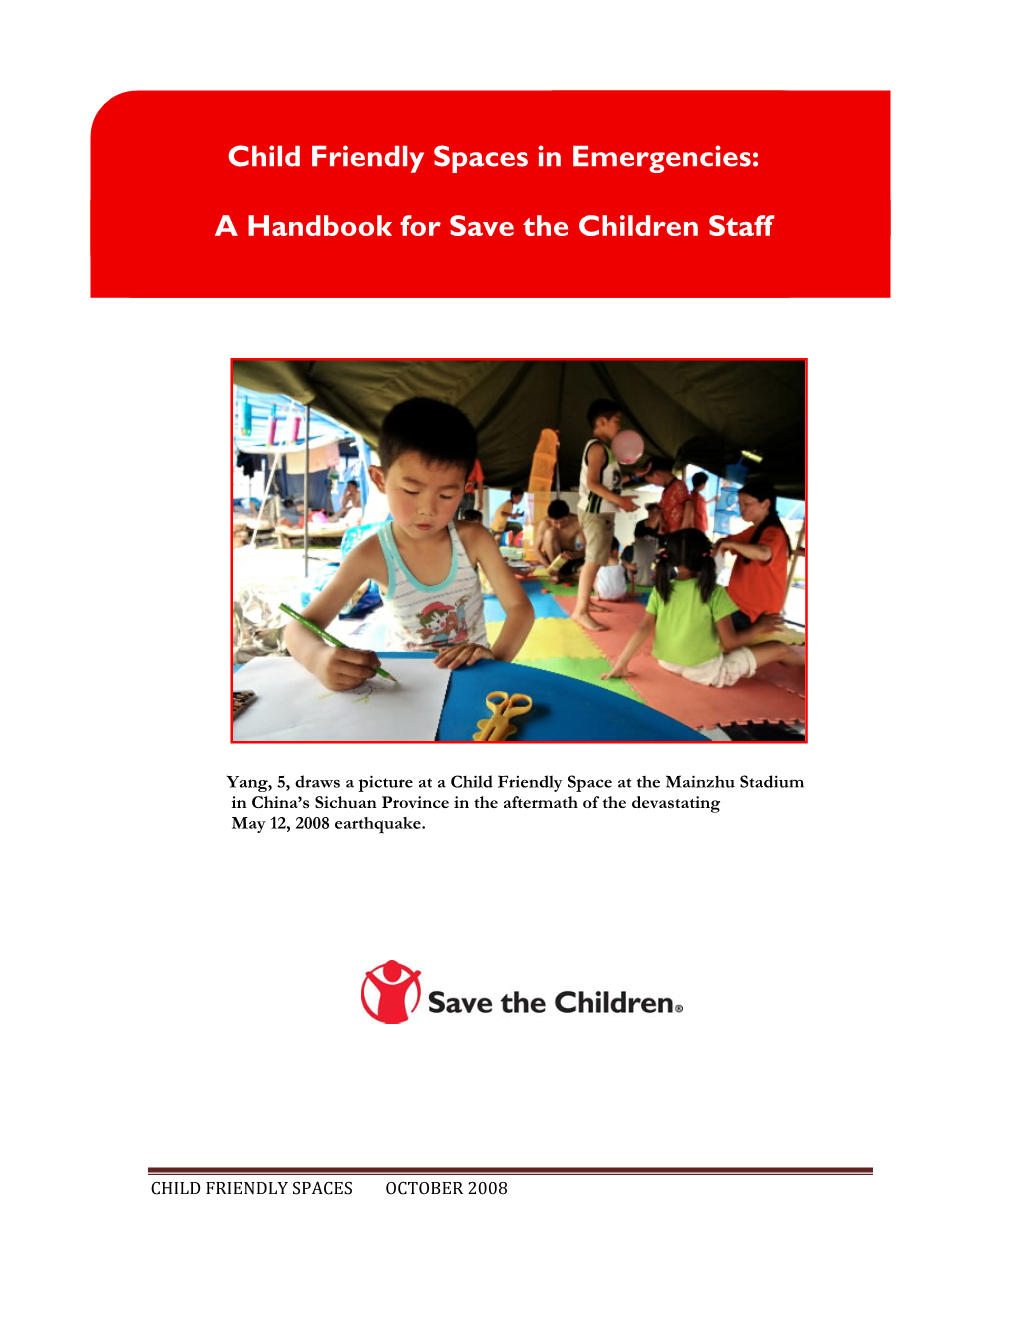 Child Friendly Space in Emergencies: a Handbook for Save the Children Staff